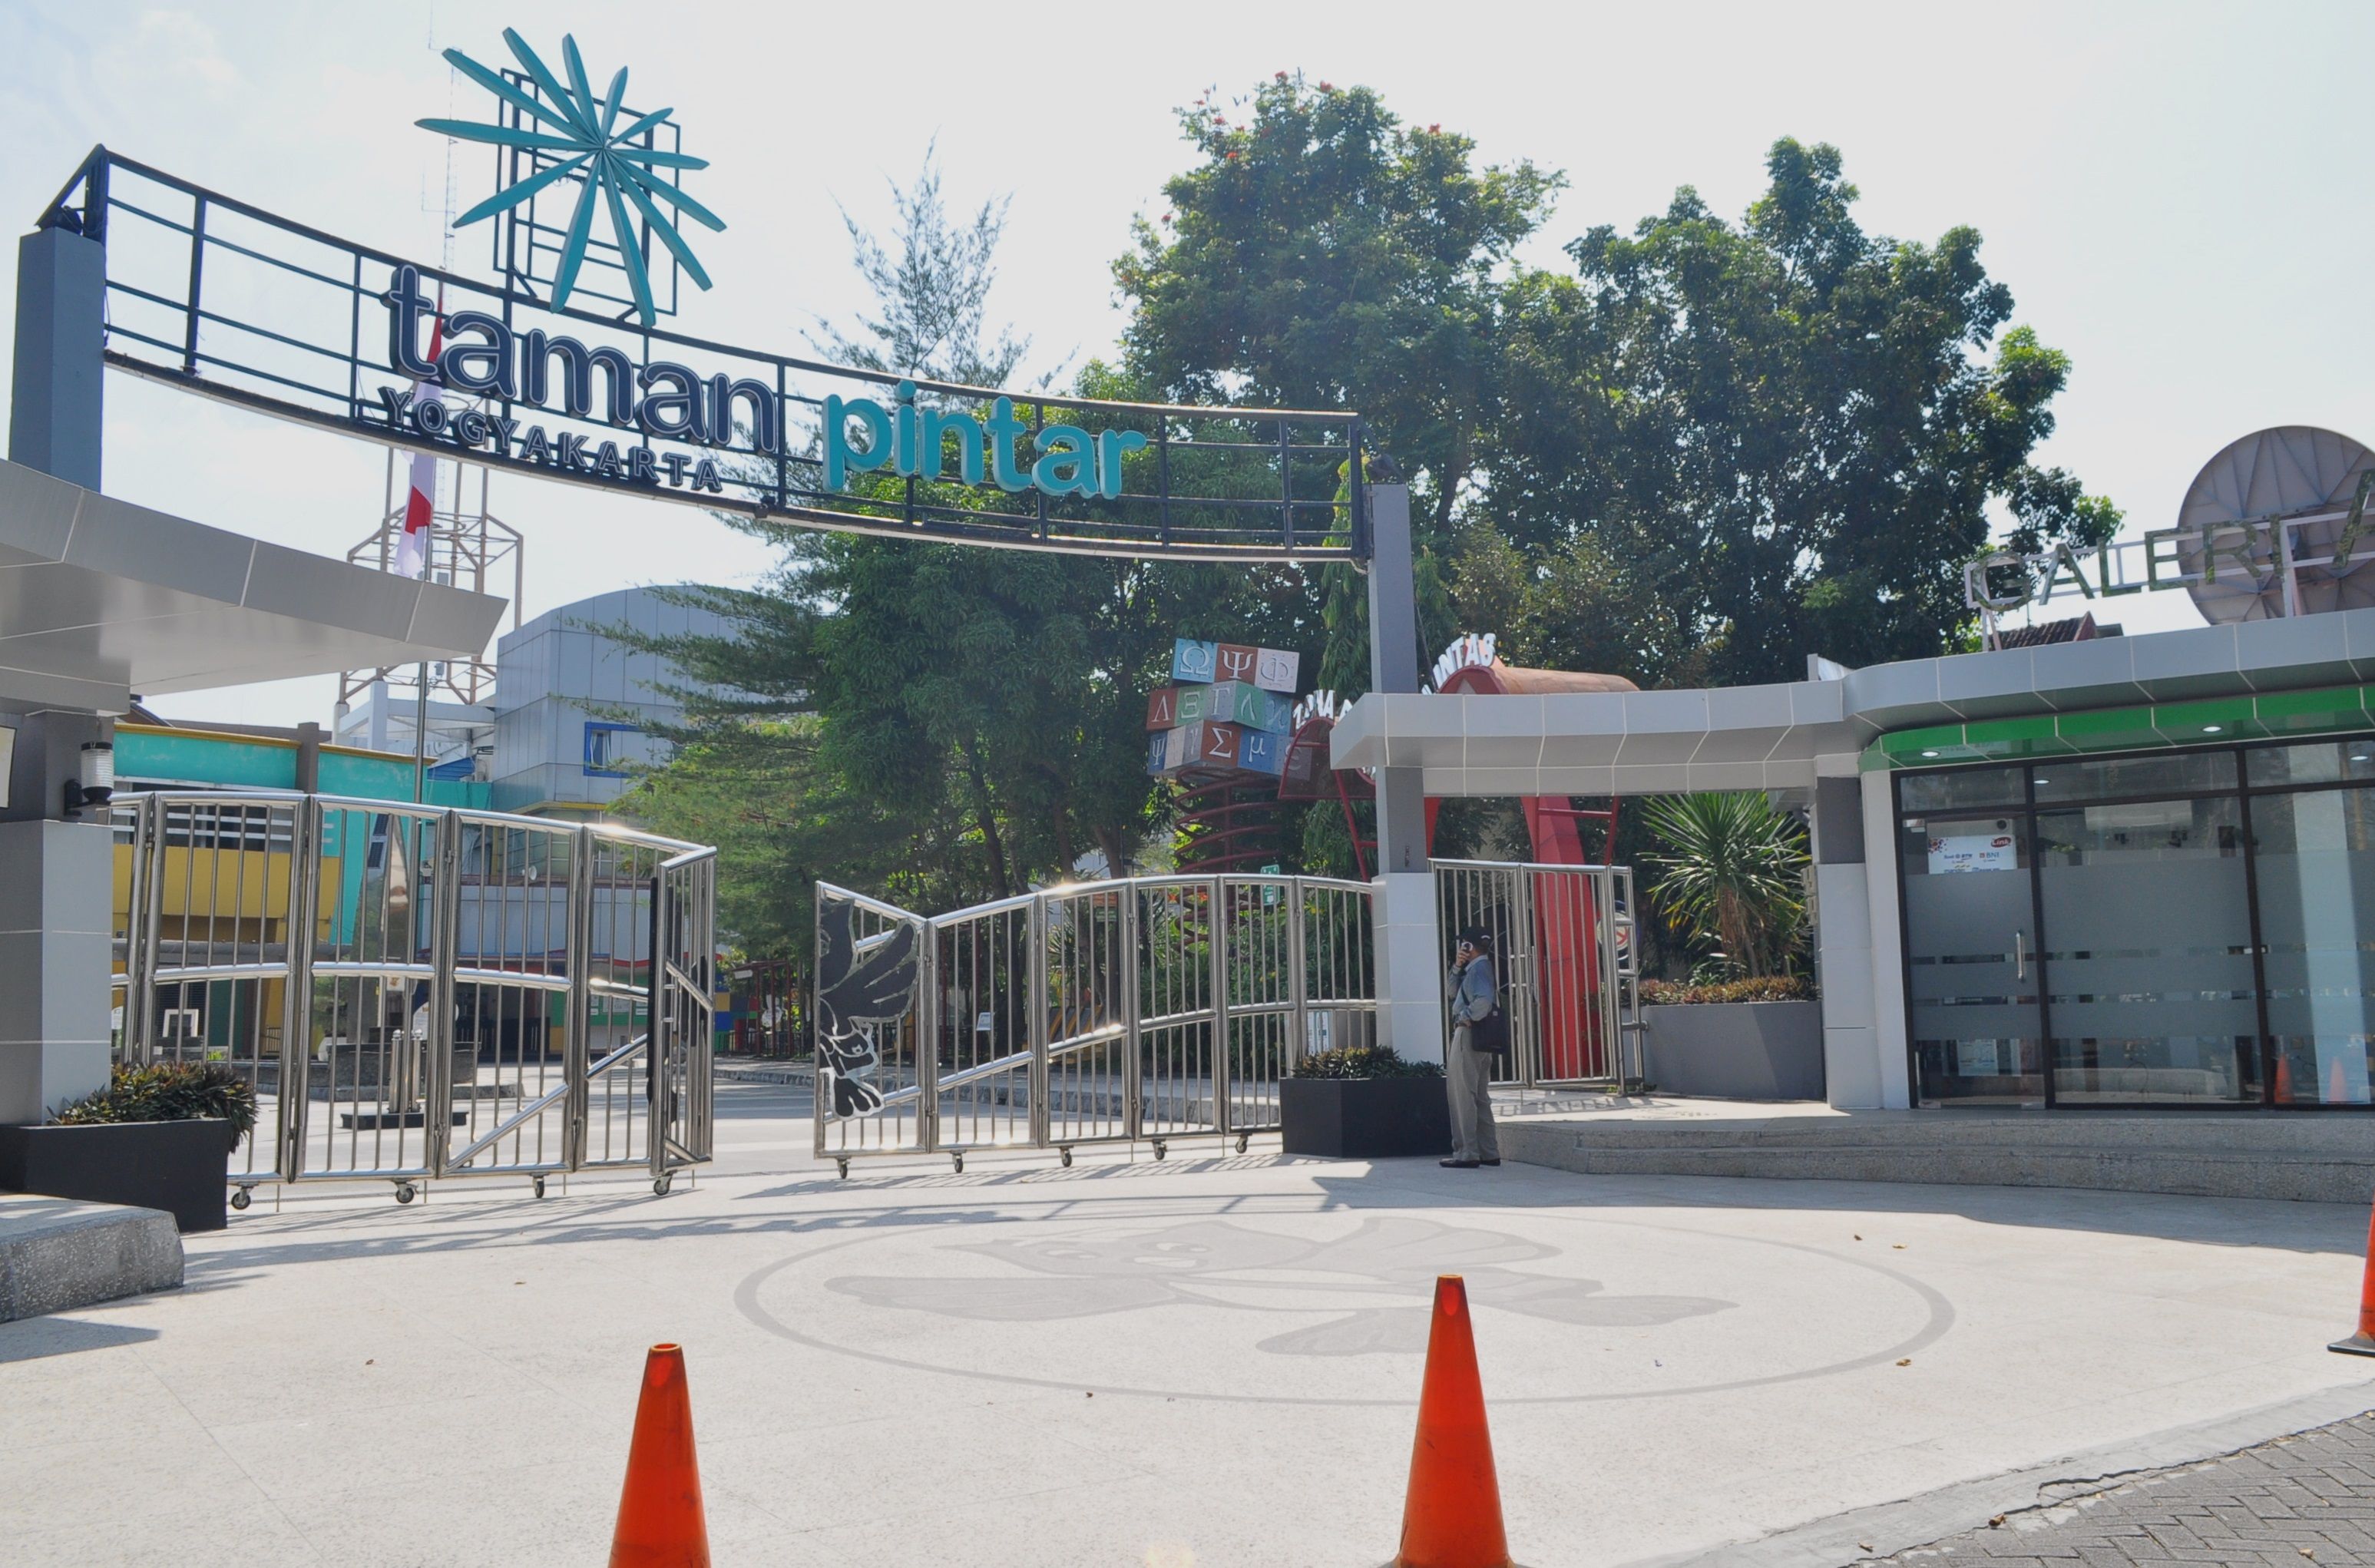 Komplek Shoping Center, Bioskop Yogya Theater dan Senopati Theater kini menjadi destinasi wisata Taman Pintar Kota Yogyakarta.